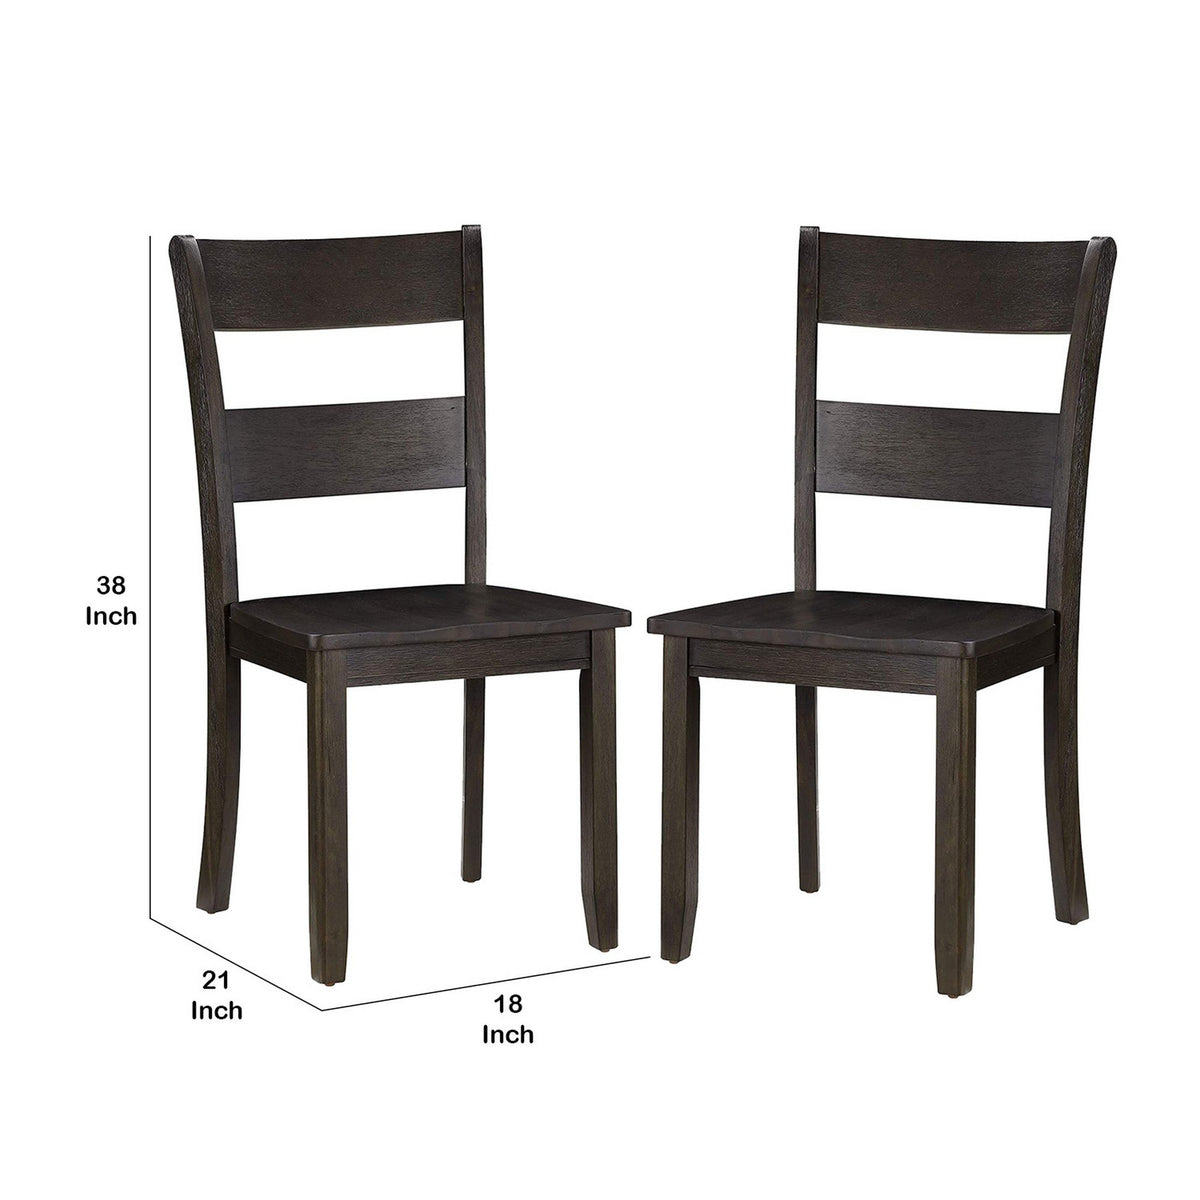 Transitional Wooden Side Chair with Ladder Backrest, Set of 2, Dark Brown - BM221384